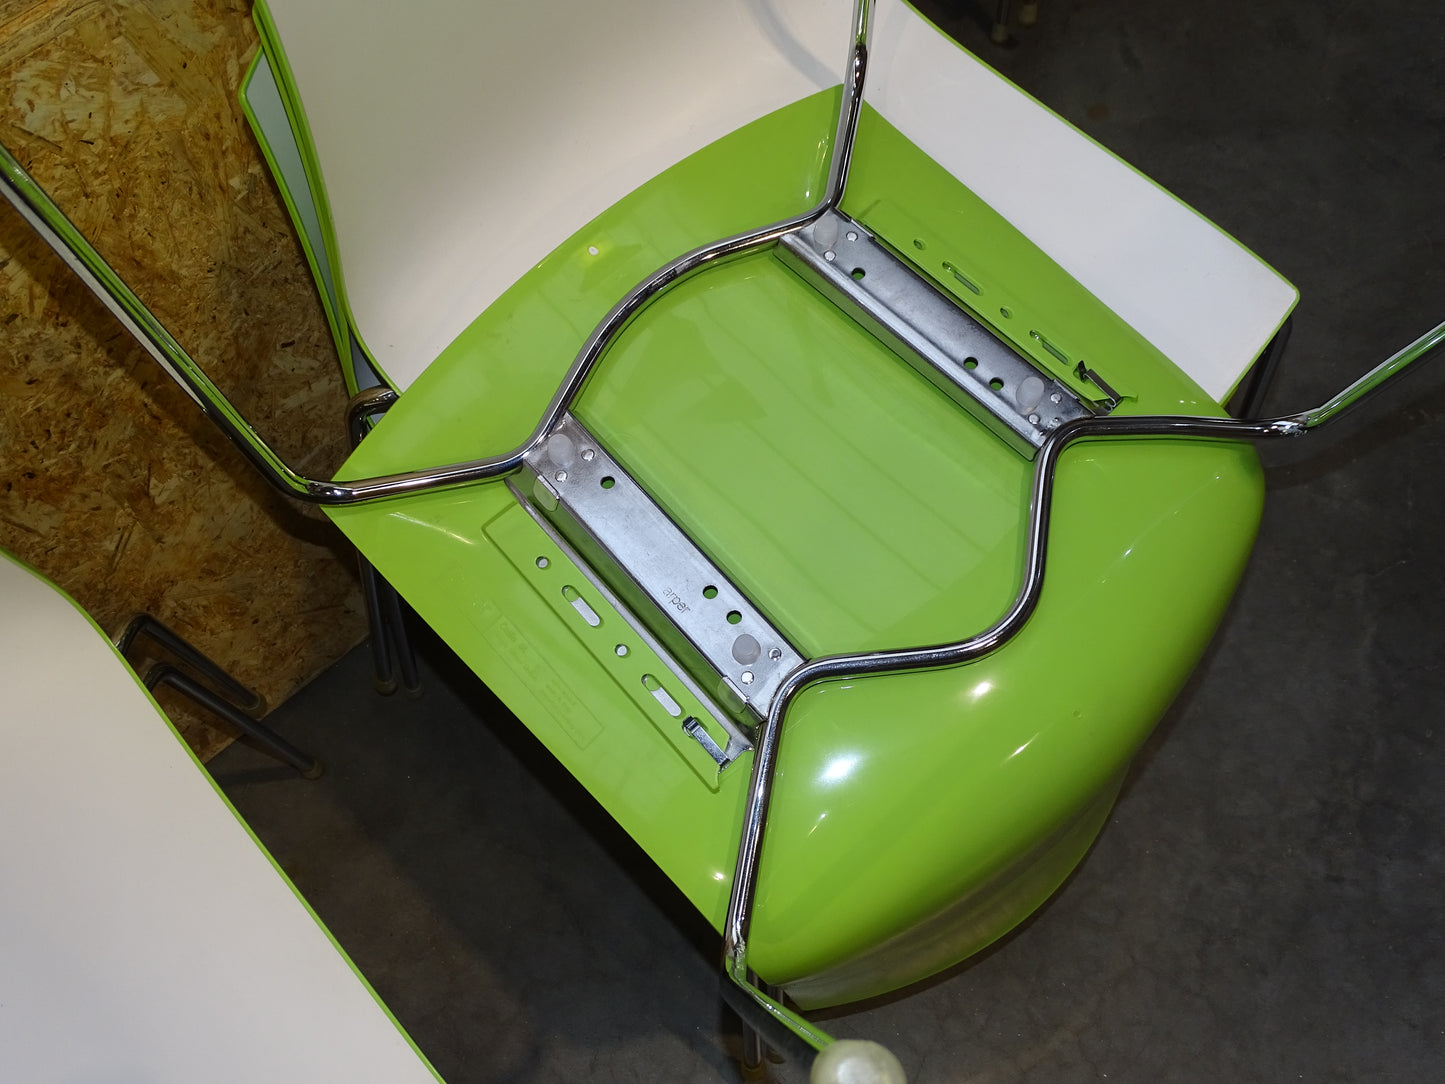 6 Design stoelen: Arper, Catifa 46